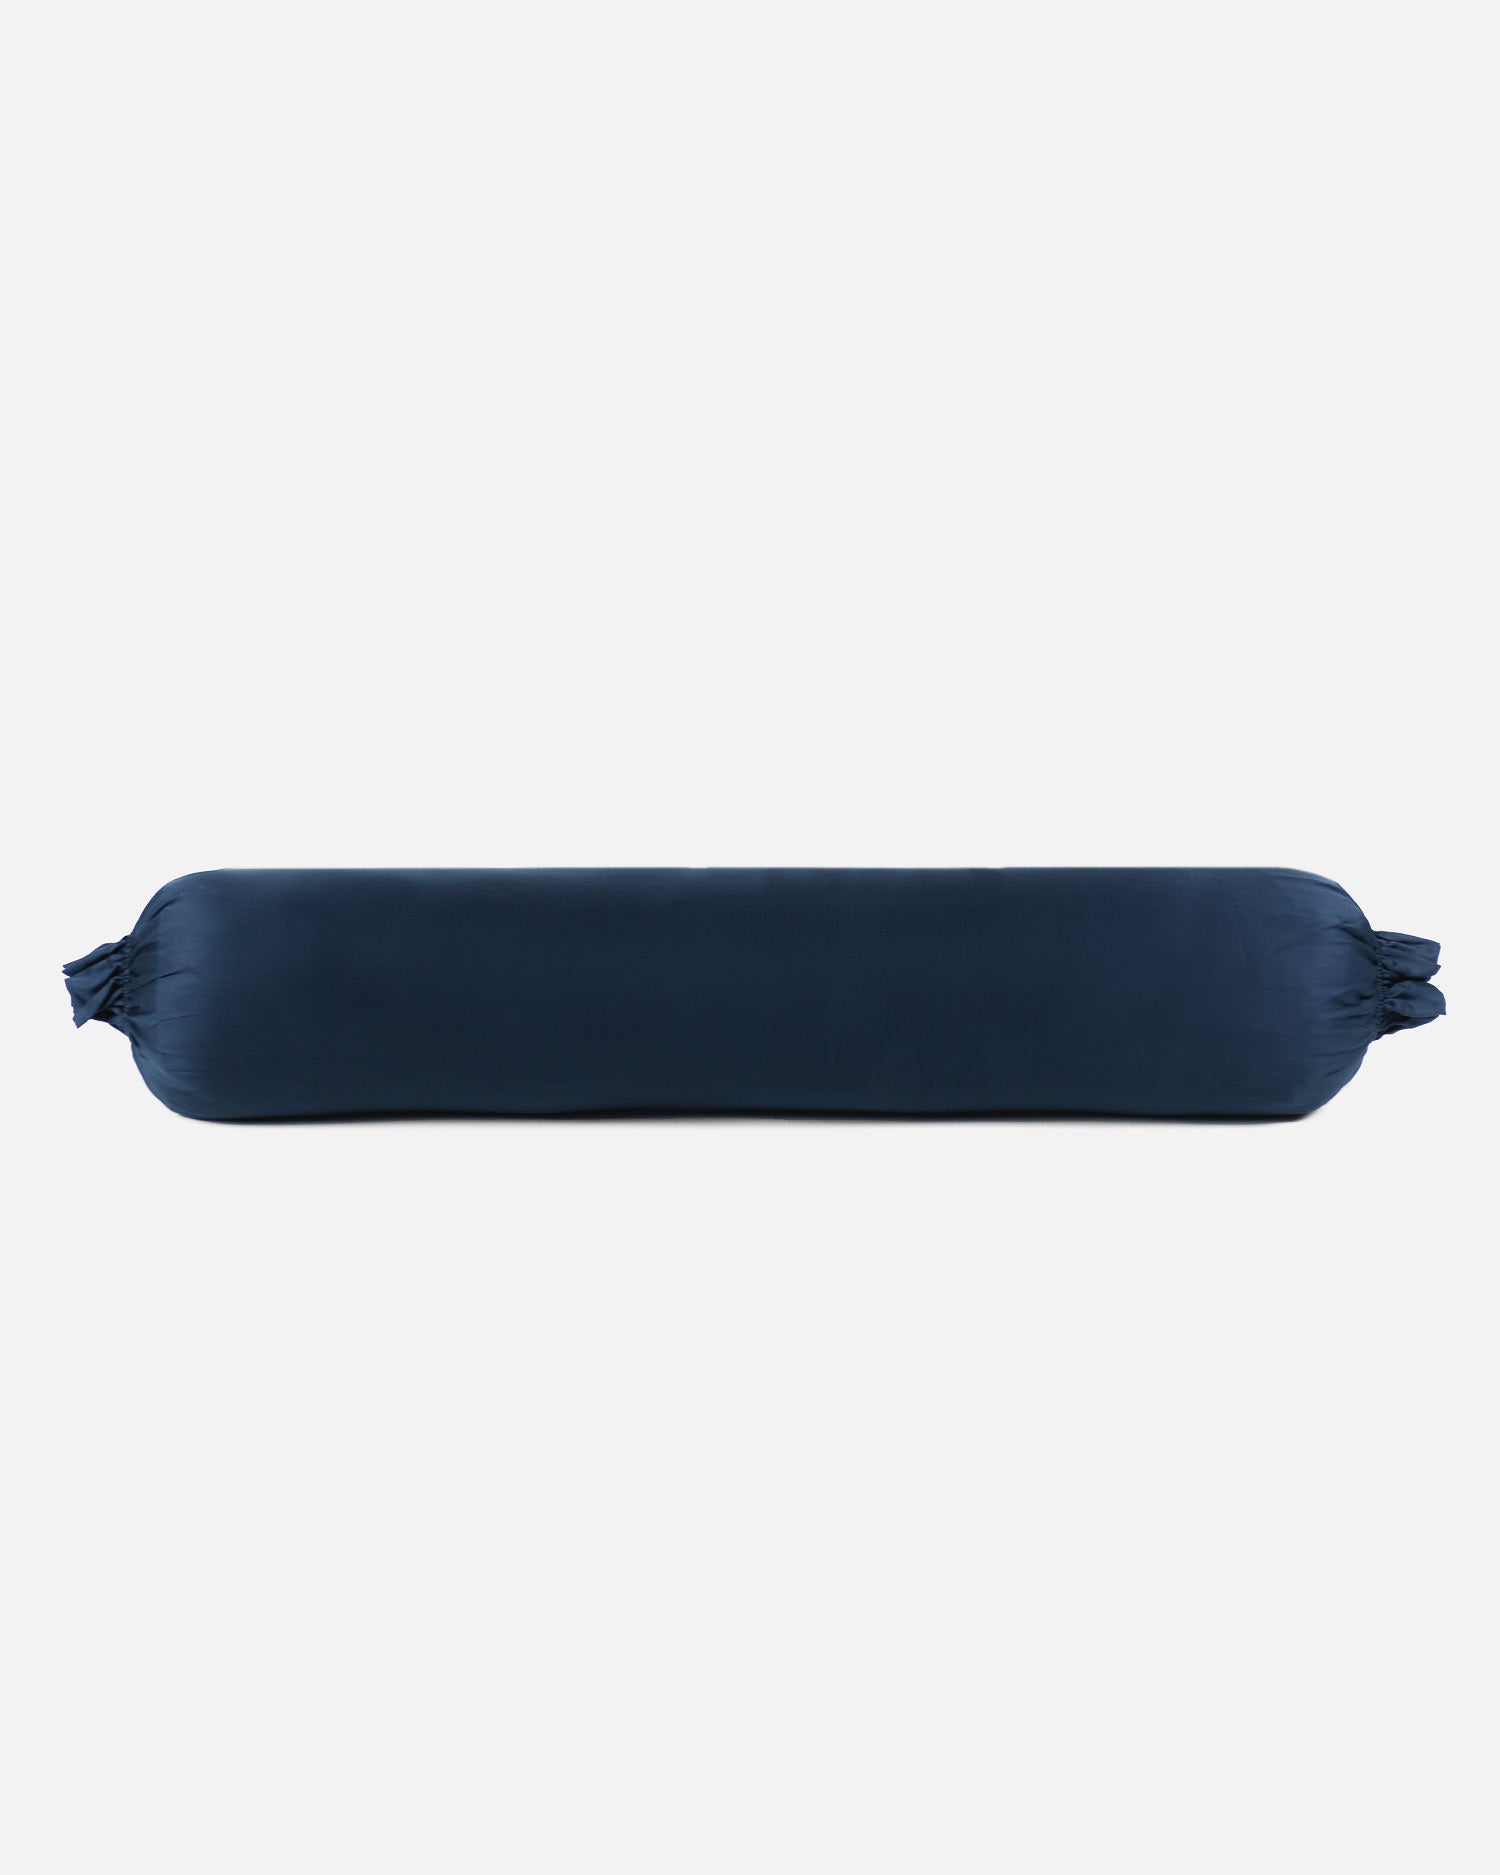 ava and ava ph organic bamboo lyocell bolster case / hotdog pillow / long pillow / po-tsim pillowcase in navy